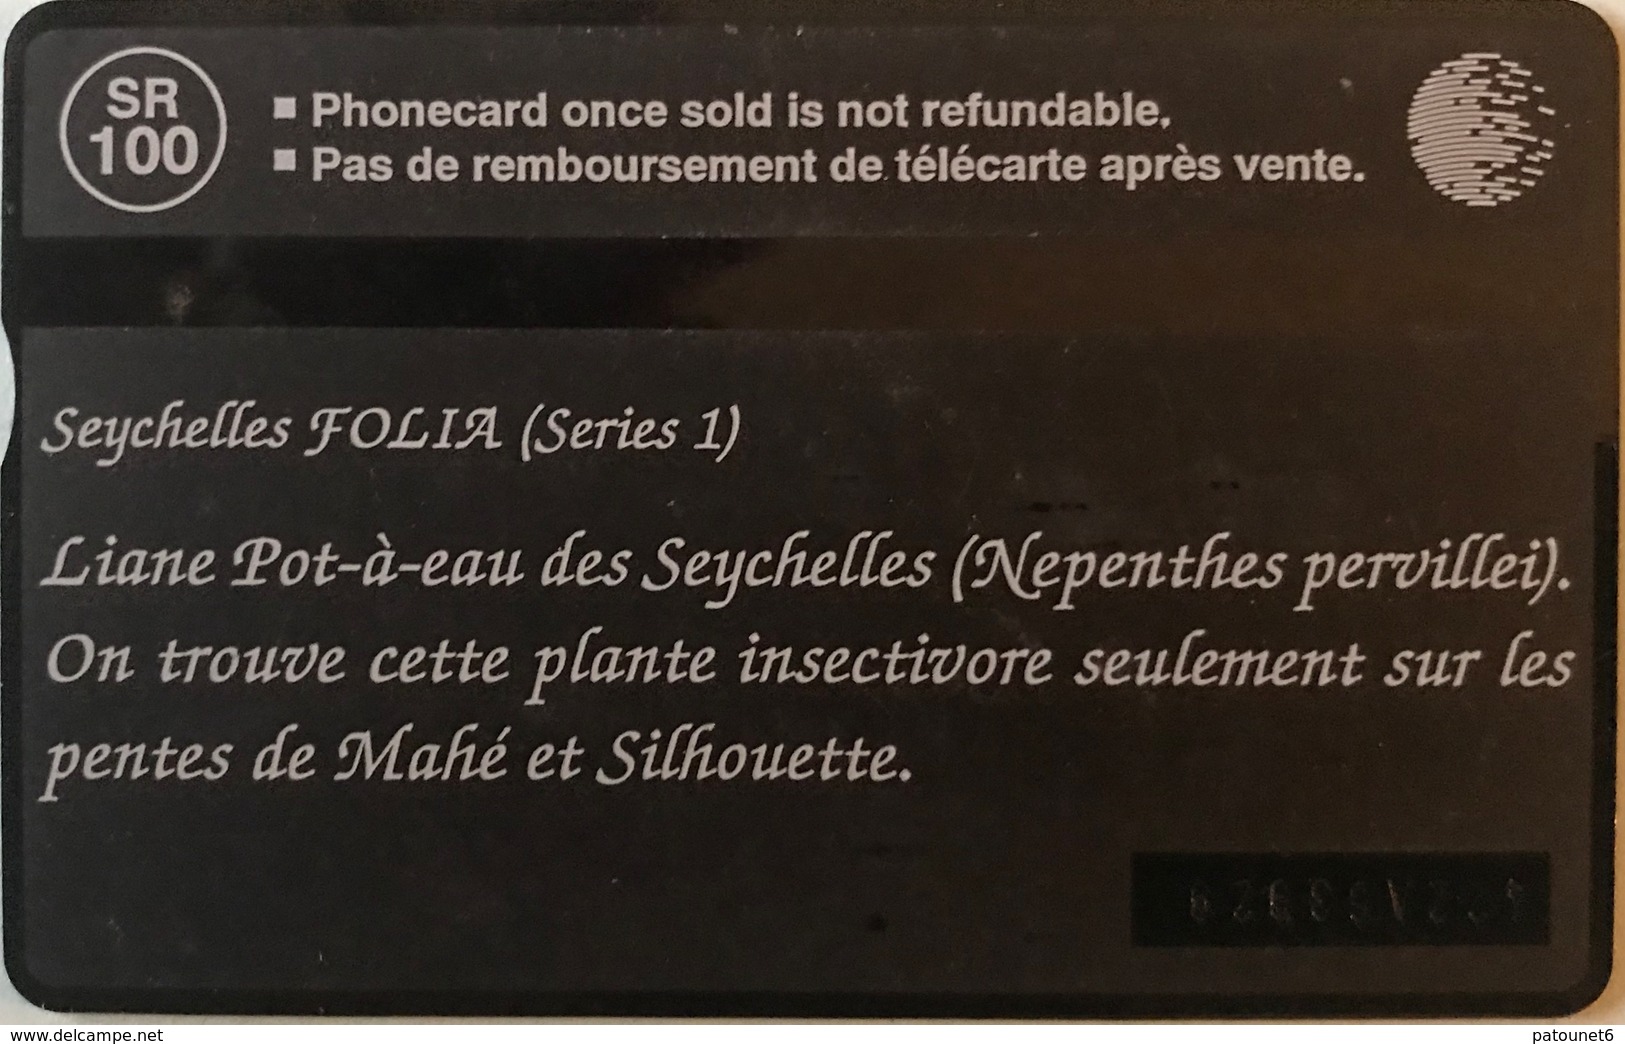 SEYCHELLES - Phonecard  -  Landis § Gyr  -  Seychelles Folia  -  120 Units - Seychelles